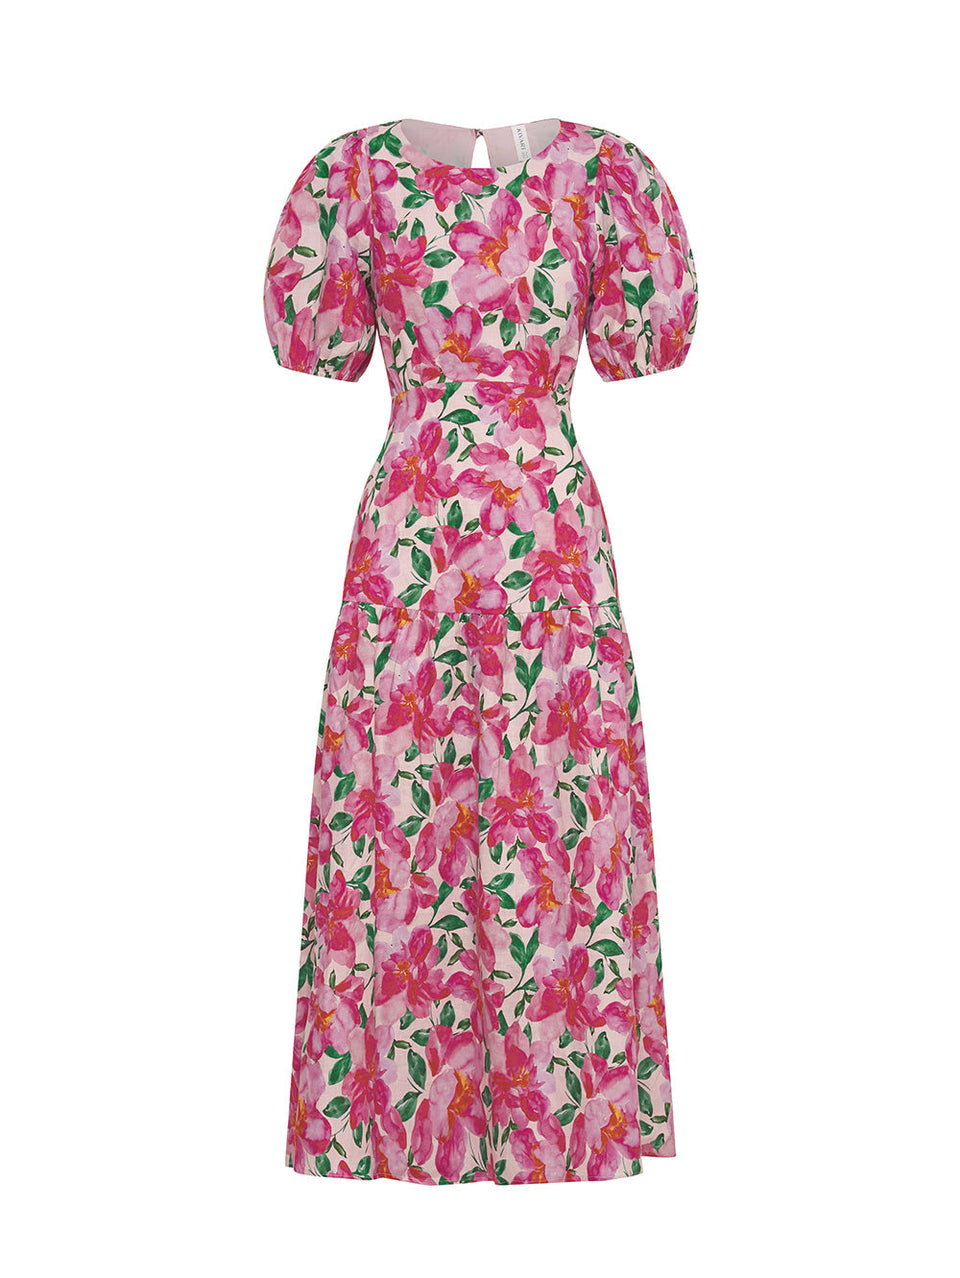 KIVARI Antonia Shirred Mini Dress | Model wearing Pink and Green Floral Mini Dress Antonia Maxi Dress |  Pink and Green Floral Dress